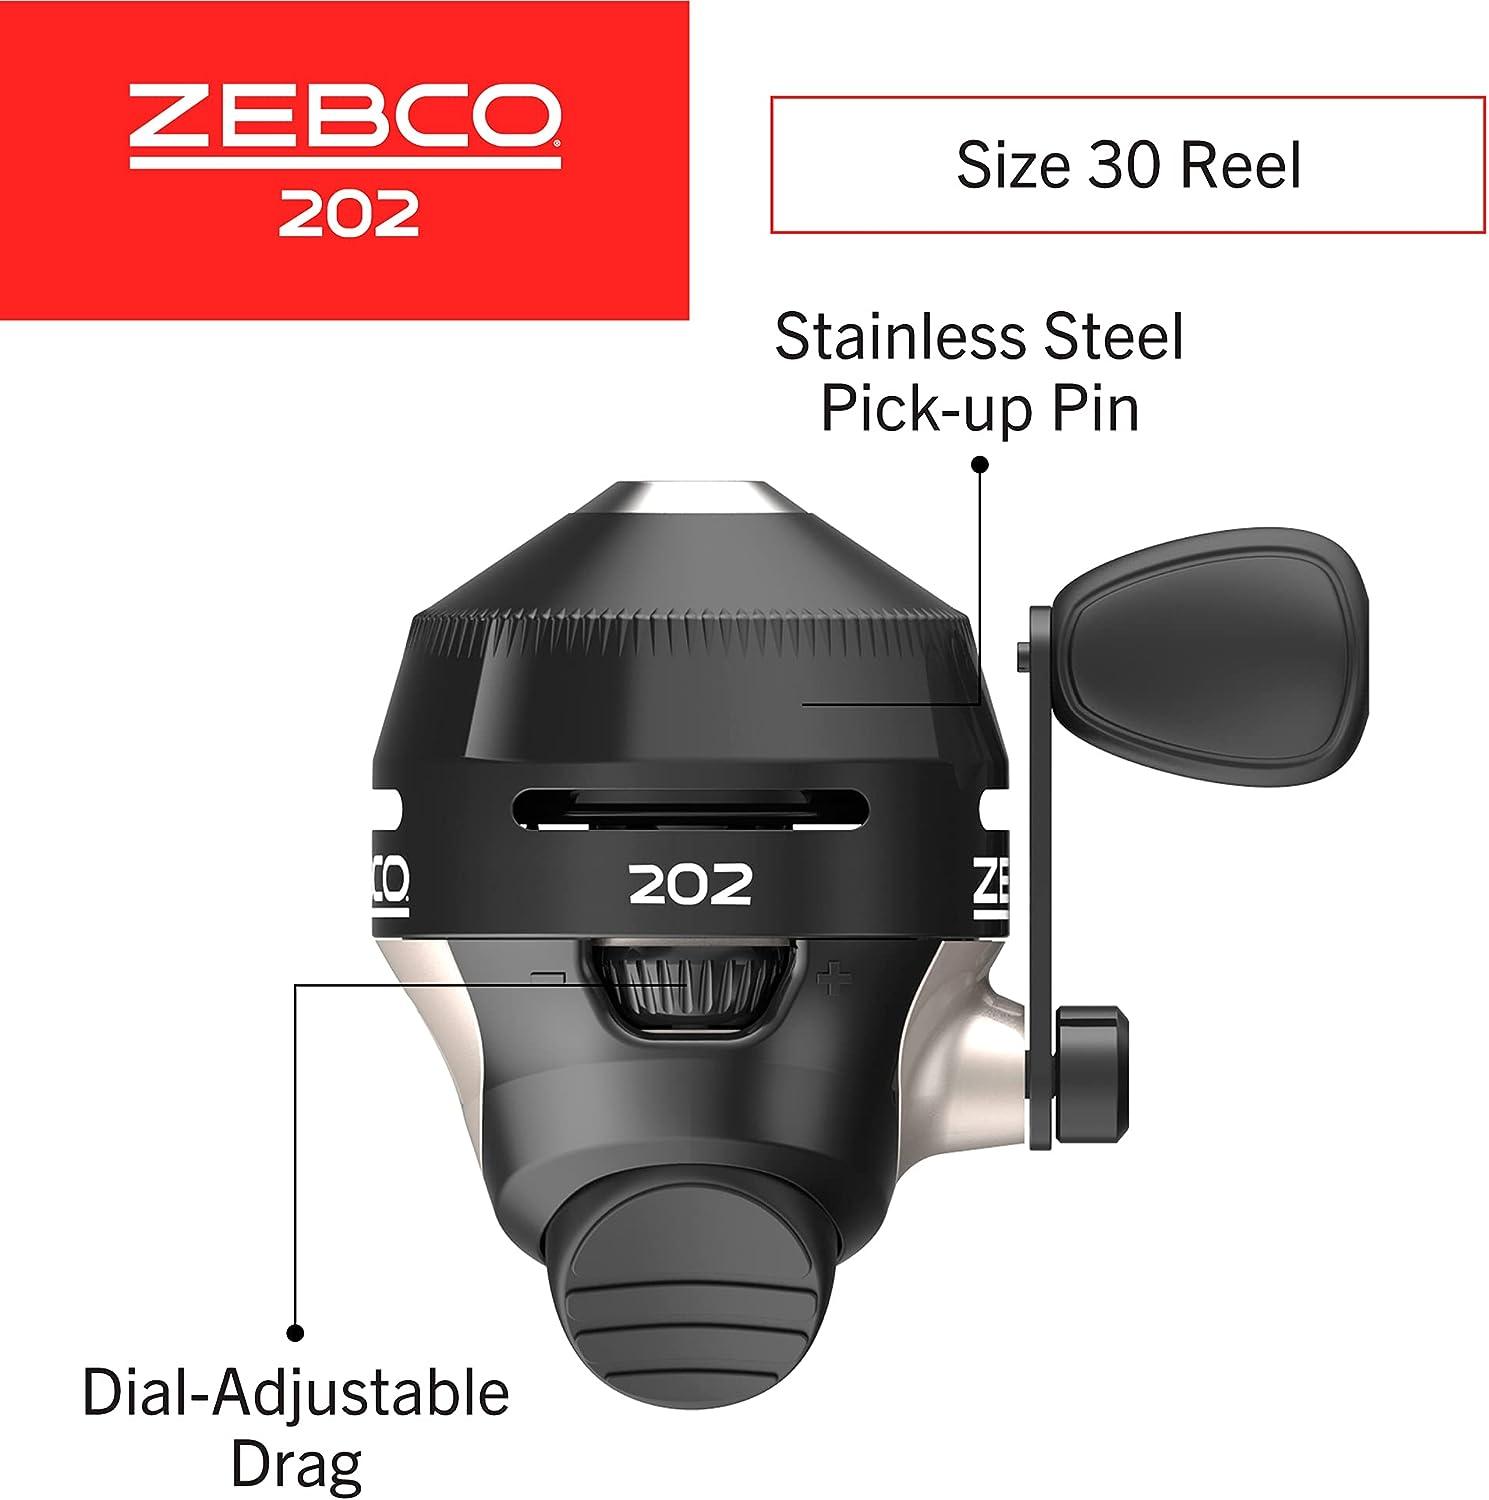 Zebco 202 Spincast Fishing Reel, Size 30 Reel, Right-Hand Retrieve